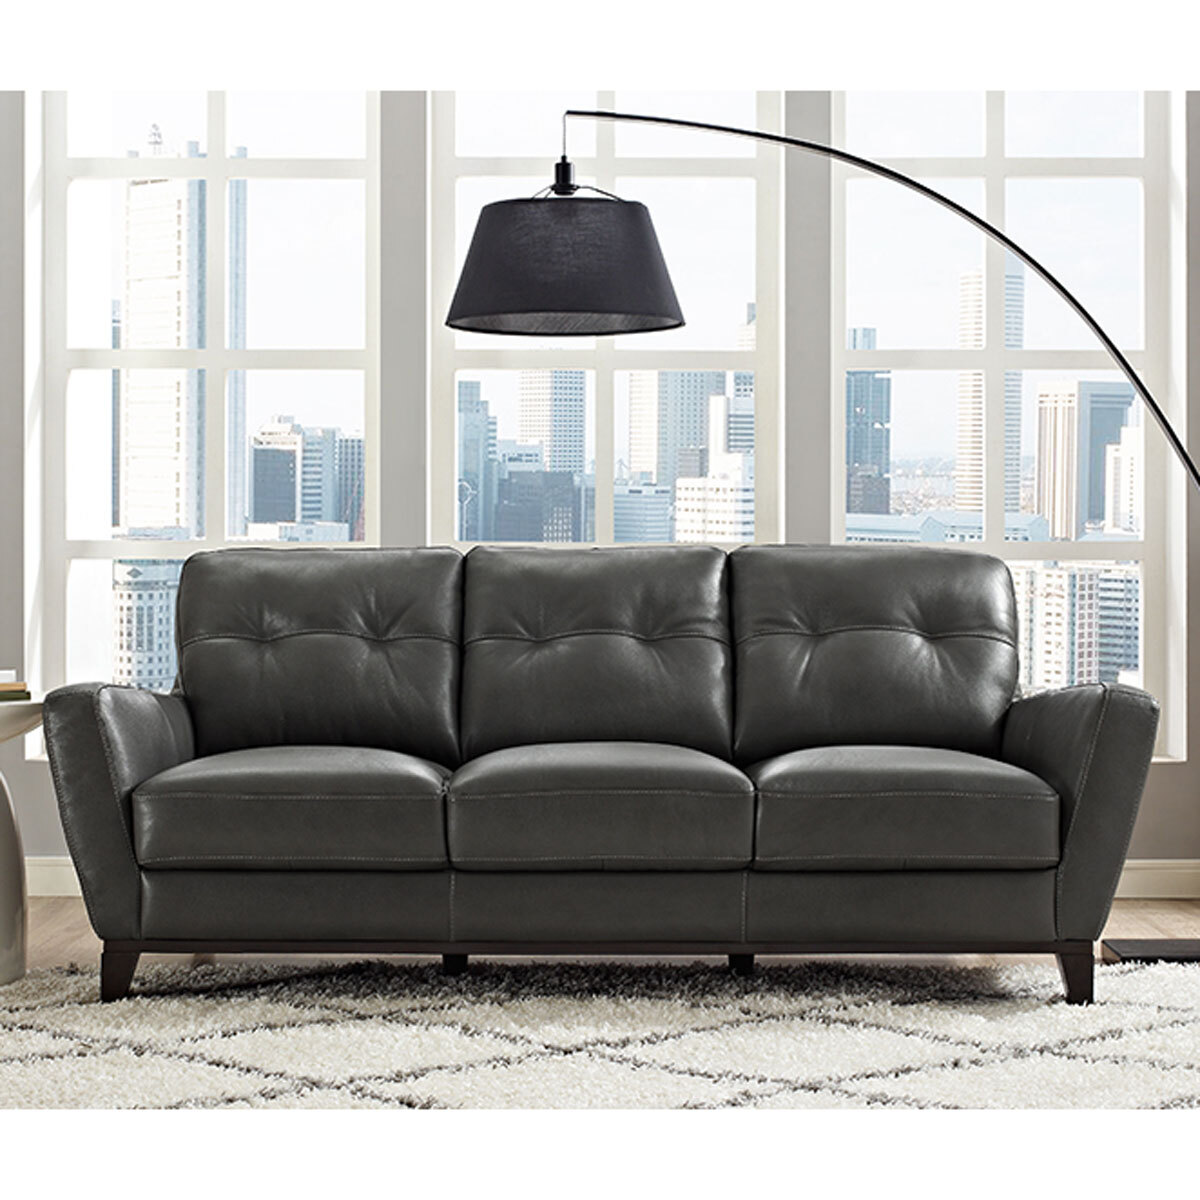 Grey Leather 3 Seater Sofa Costco Uk, Natucci Leather Furniture